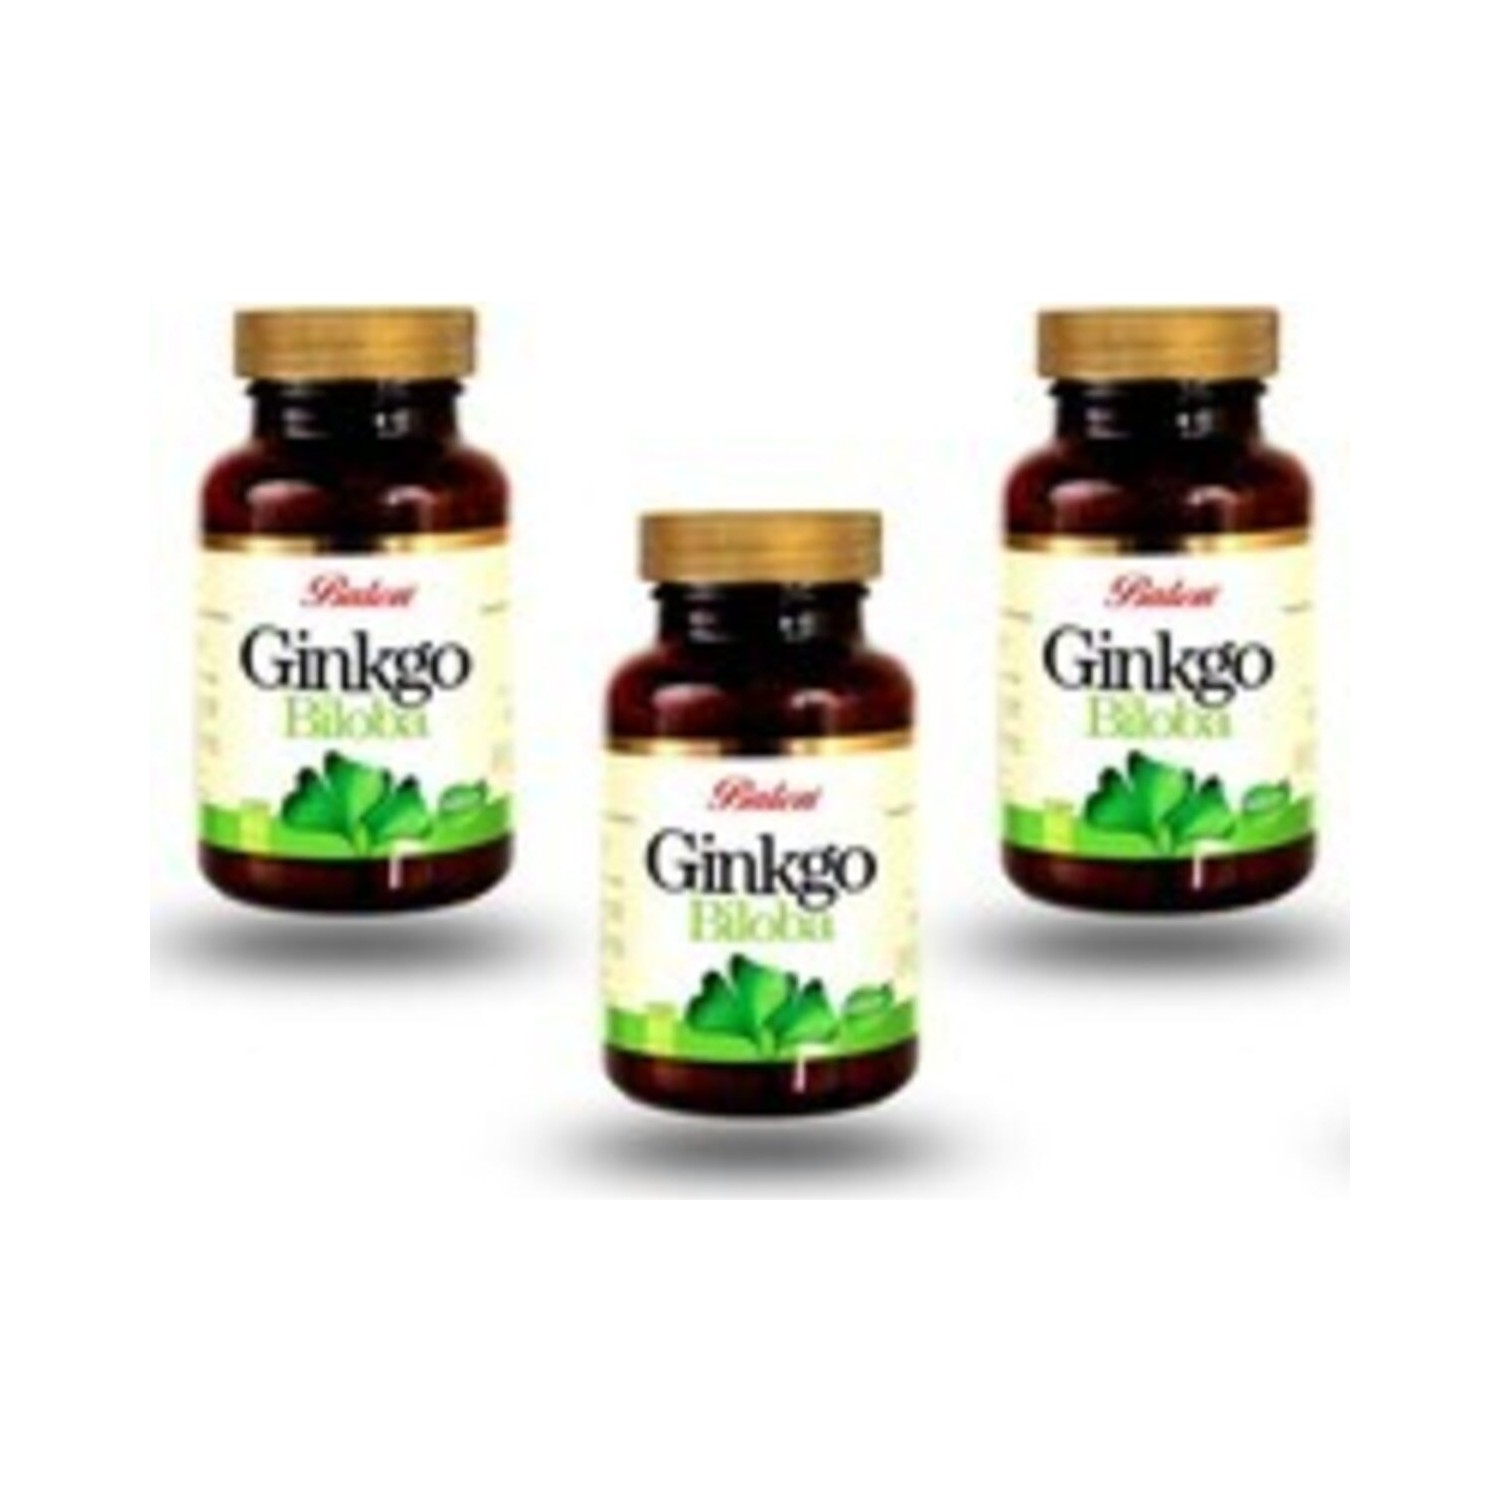 Активная добавка Balen Ginkgo Biloba Tablet, 60 капсул, 600 мг, 3 штуки активная добавка balen ginkgo biloba 60 капсул